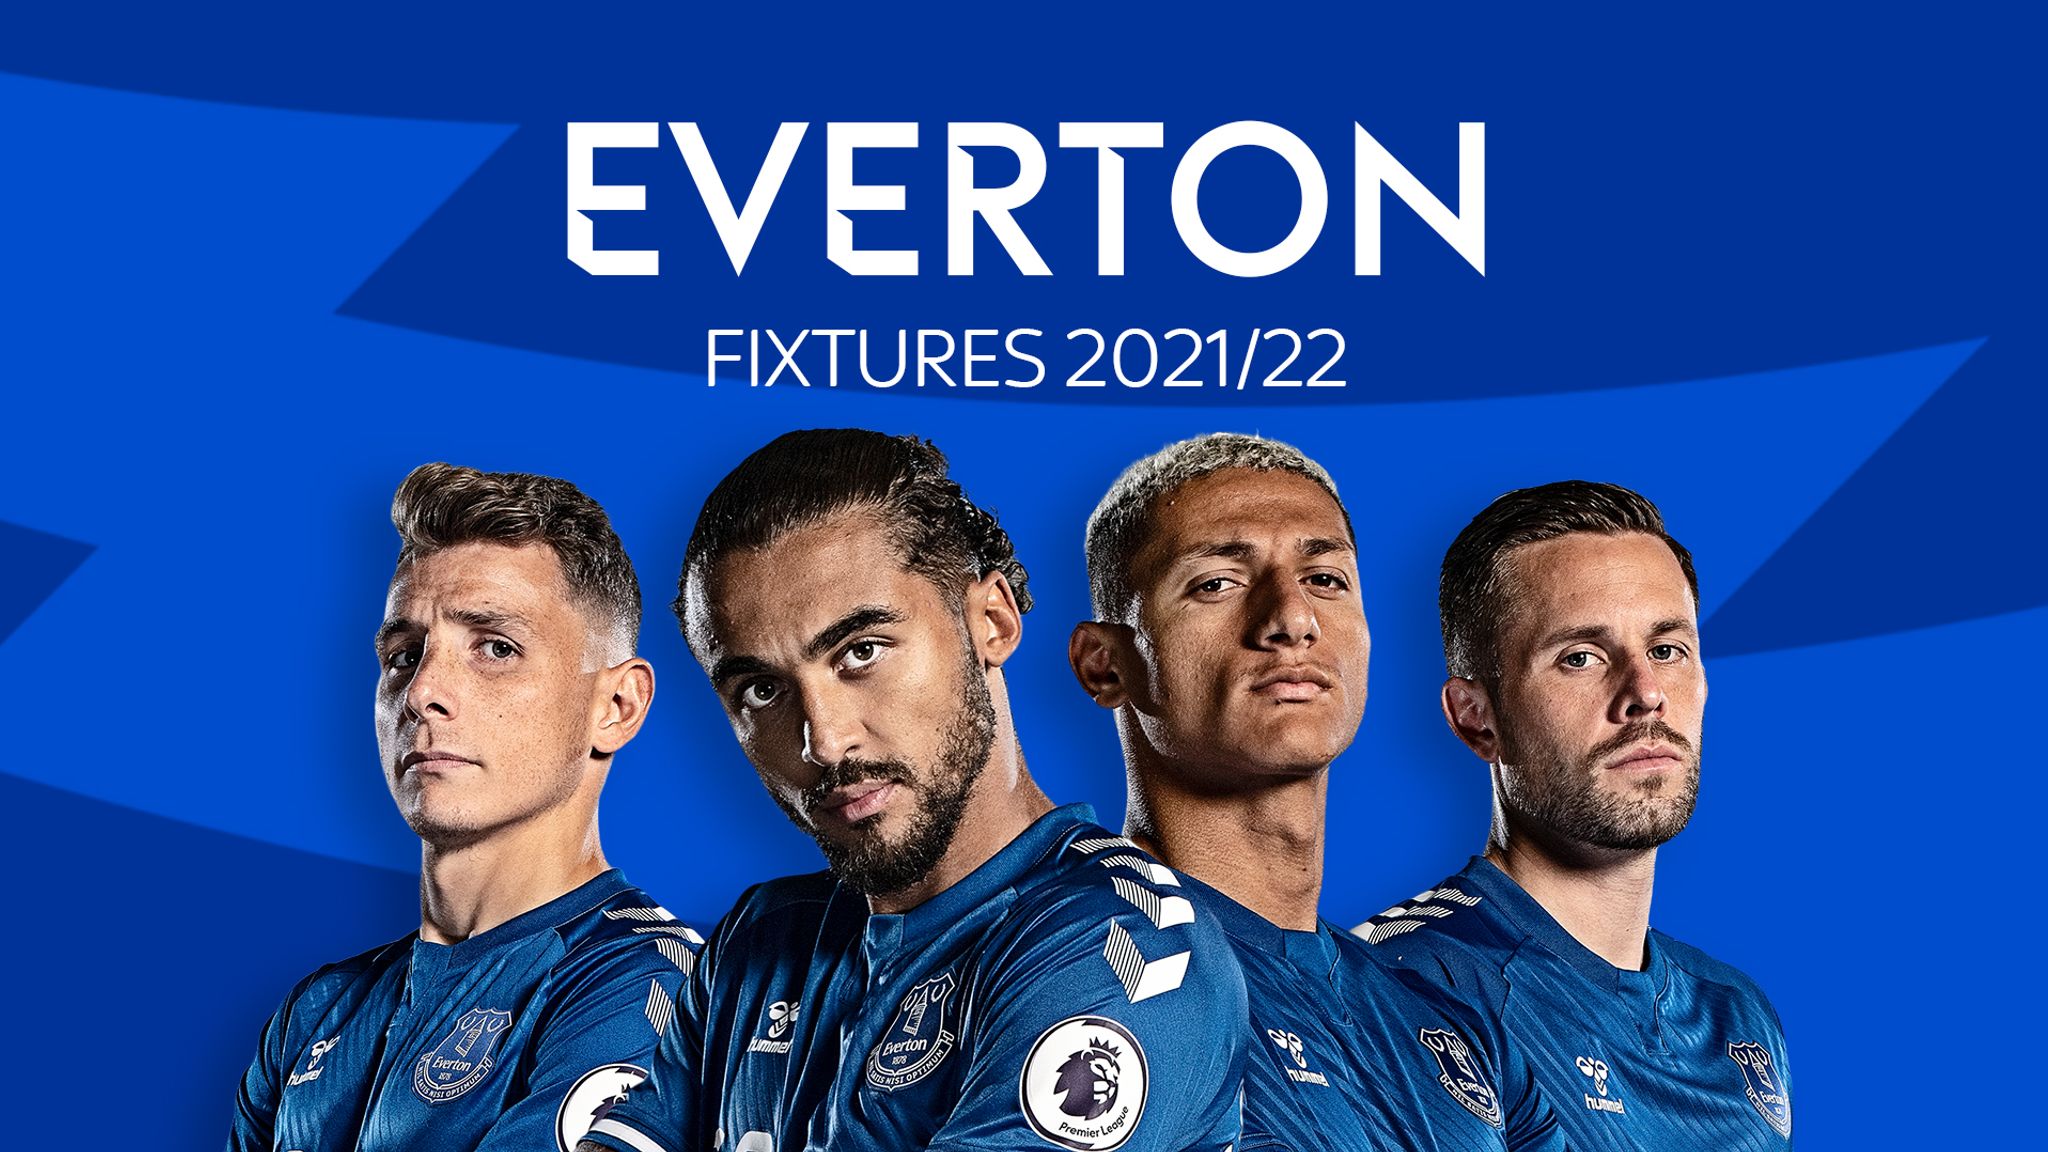 Everton Premier League 2021/22 fixtures and schedule Football News